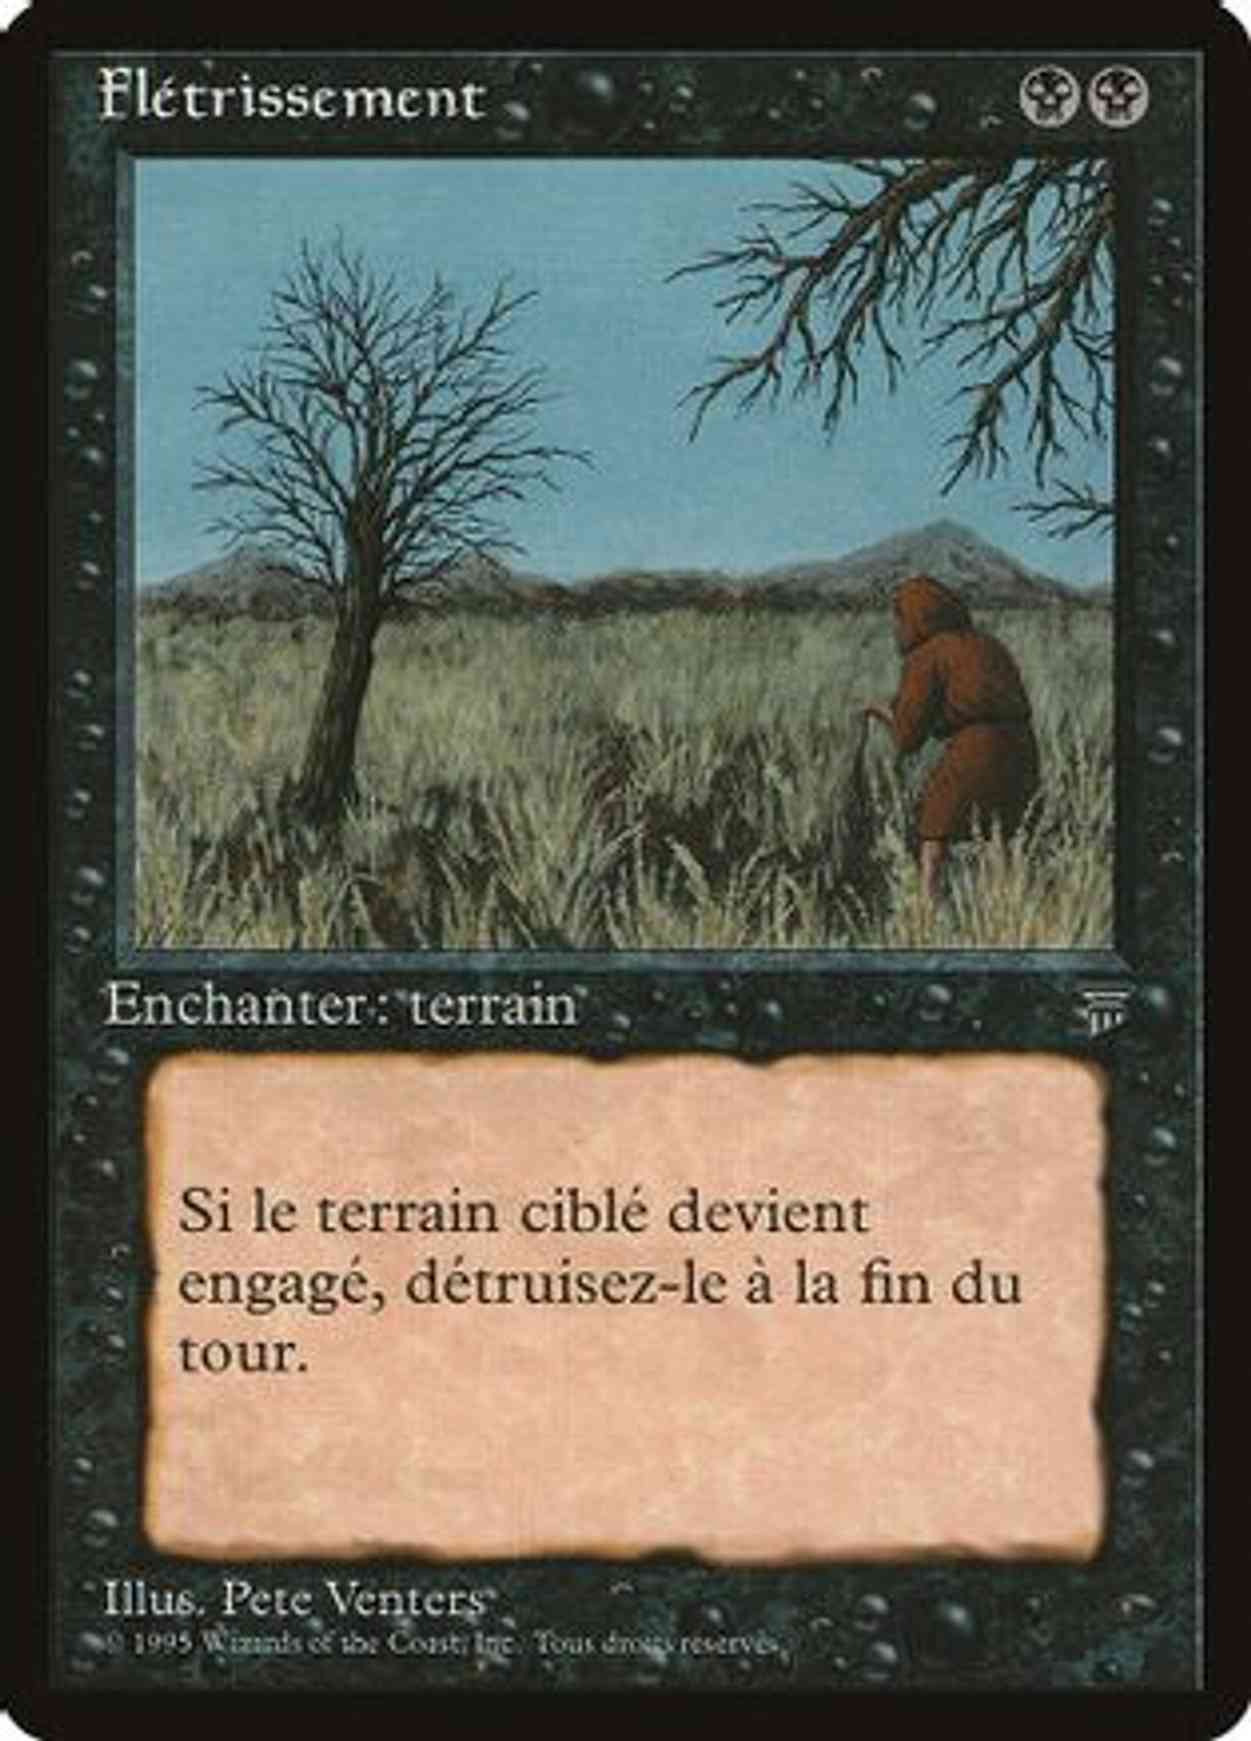 Blight (French) - "Fletrissement" magic card front